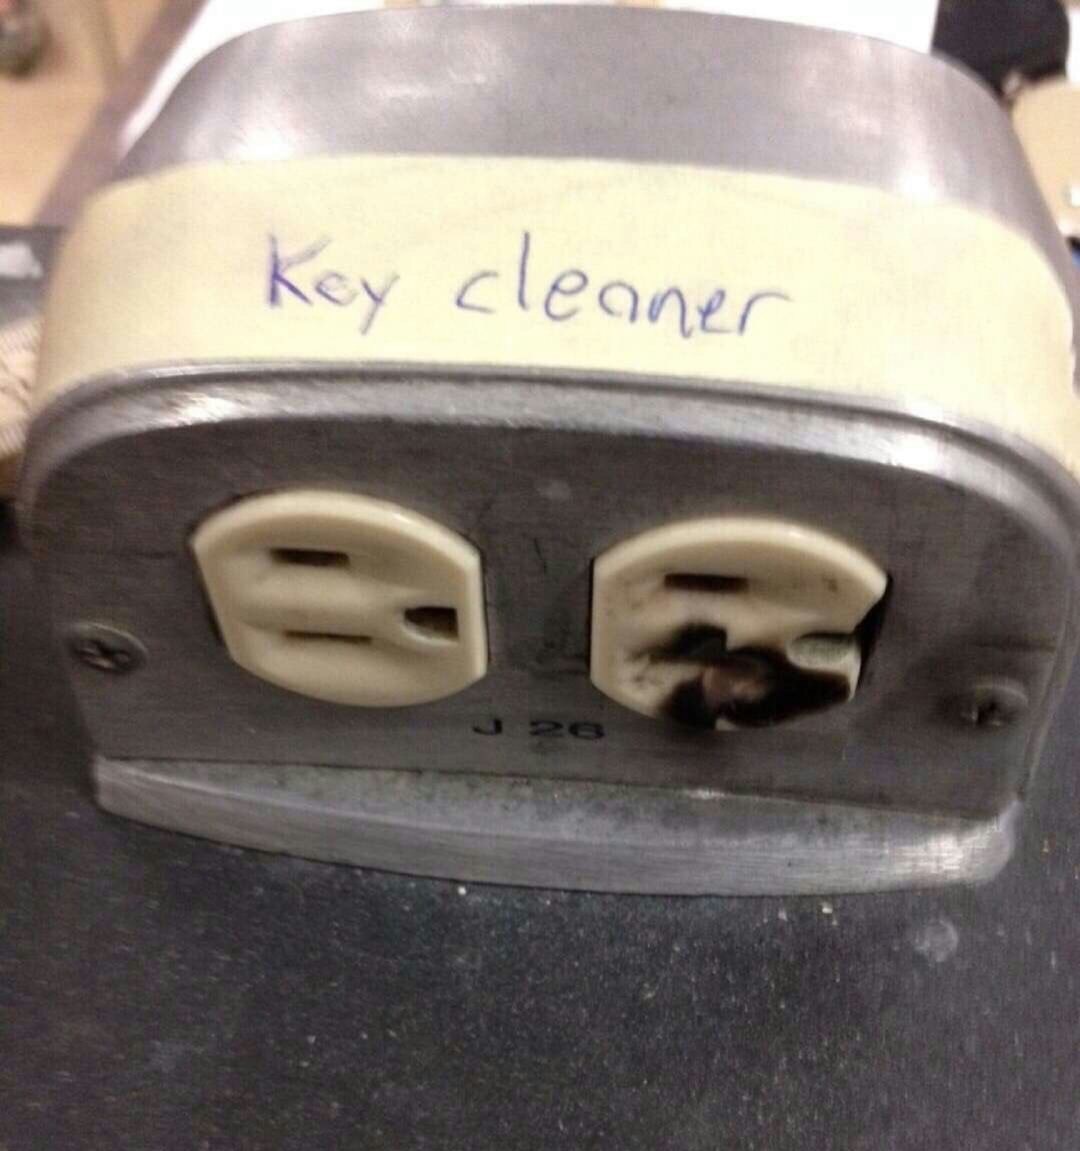 key cleaner - Key cleaner 20